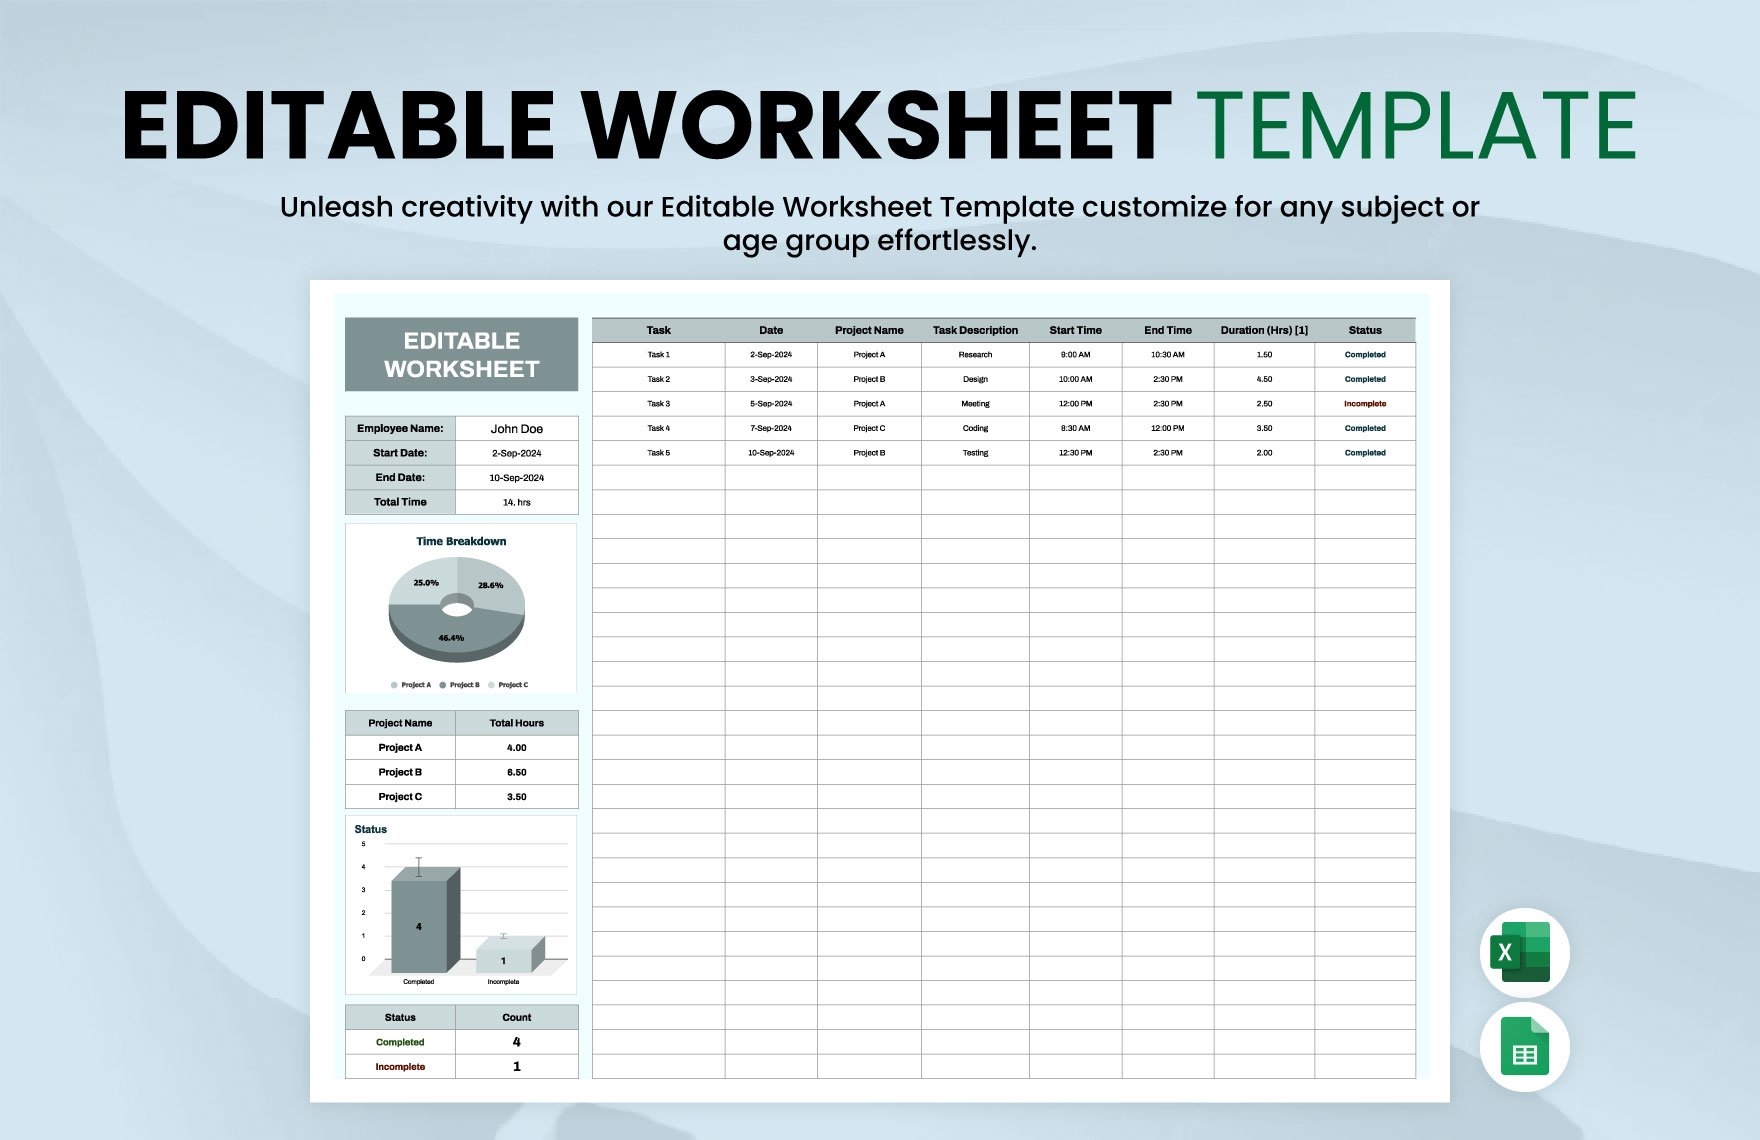 Editable Worksheet Template in Excel, Google Sheets